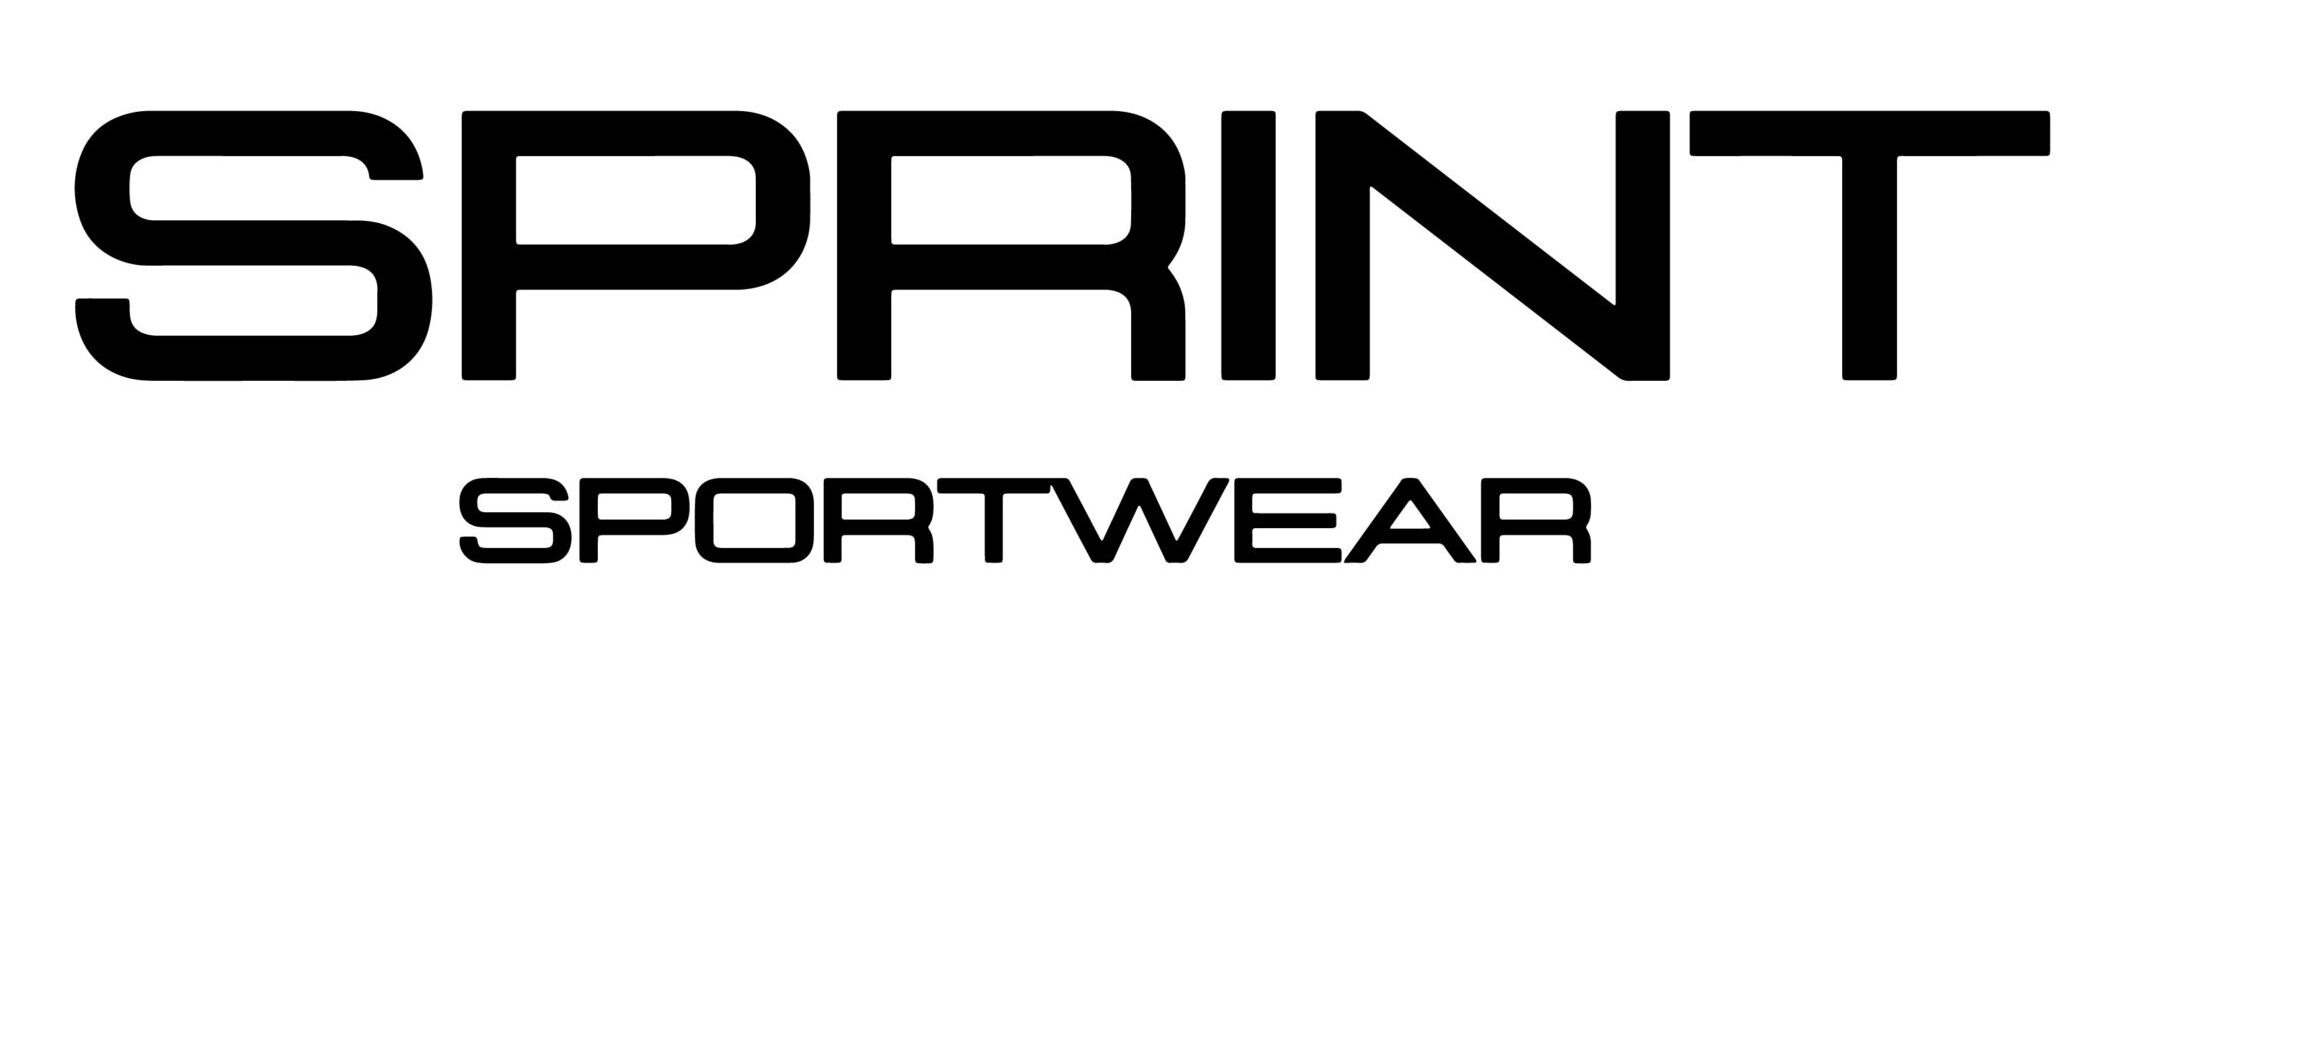 Sprint Sportwear